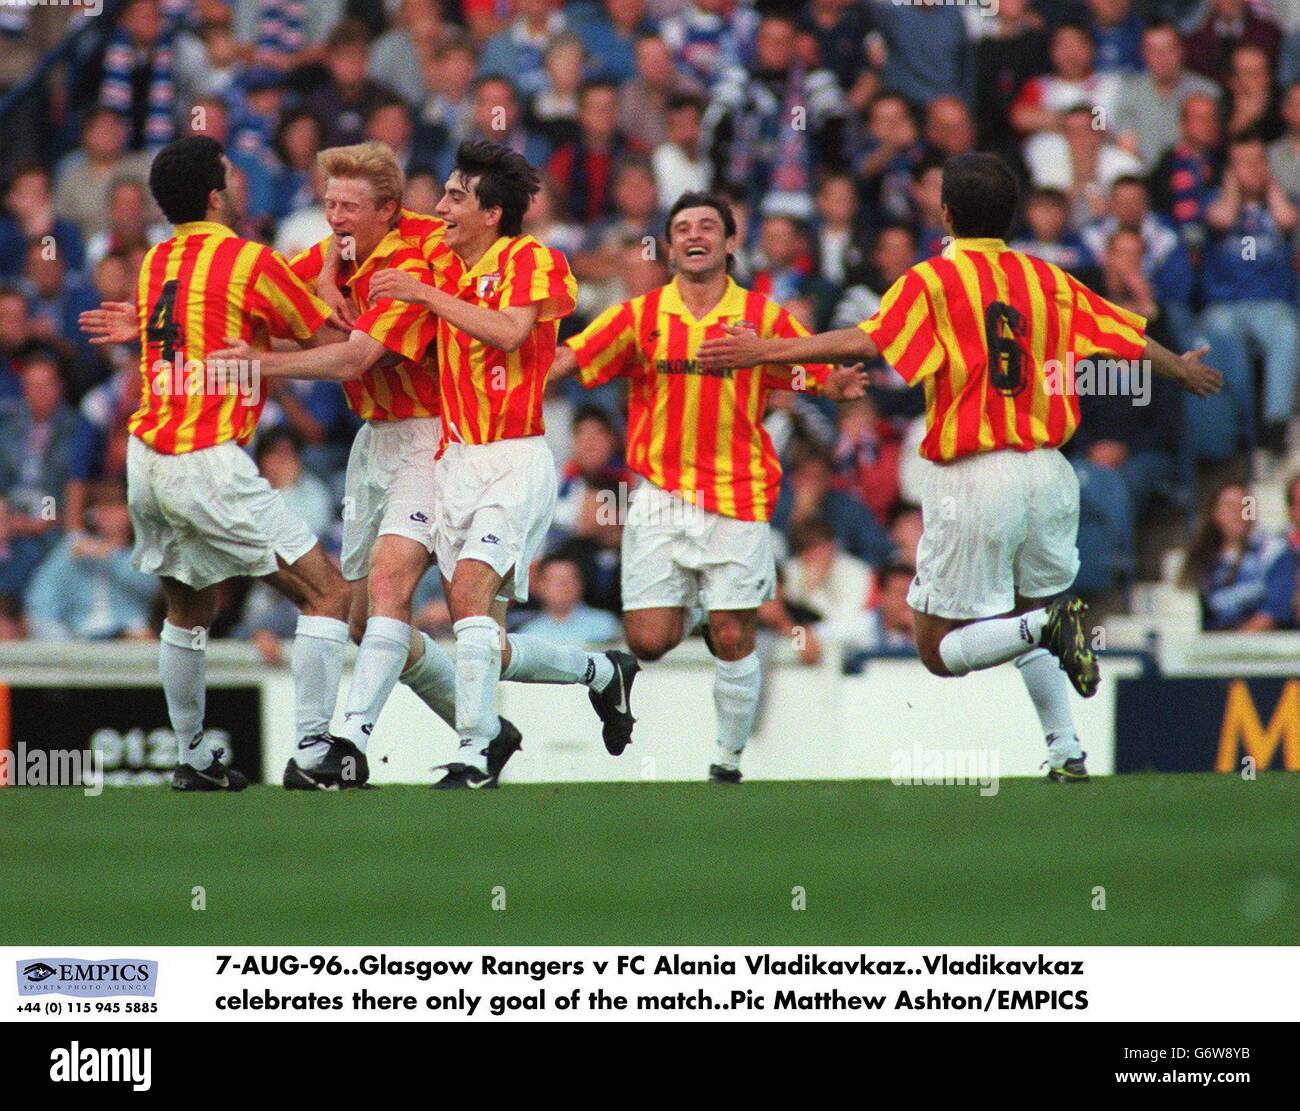 7-AUG-96. Glasgow Rangers v FC Alania Vladikavkaz. Vladikavkaz celebrates there only goal of the match Stock Photo